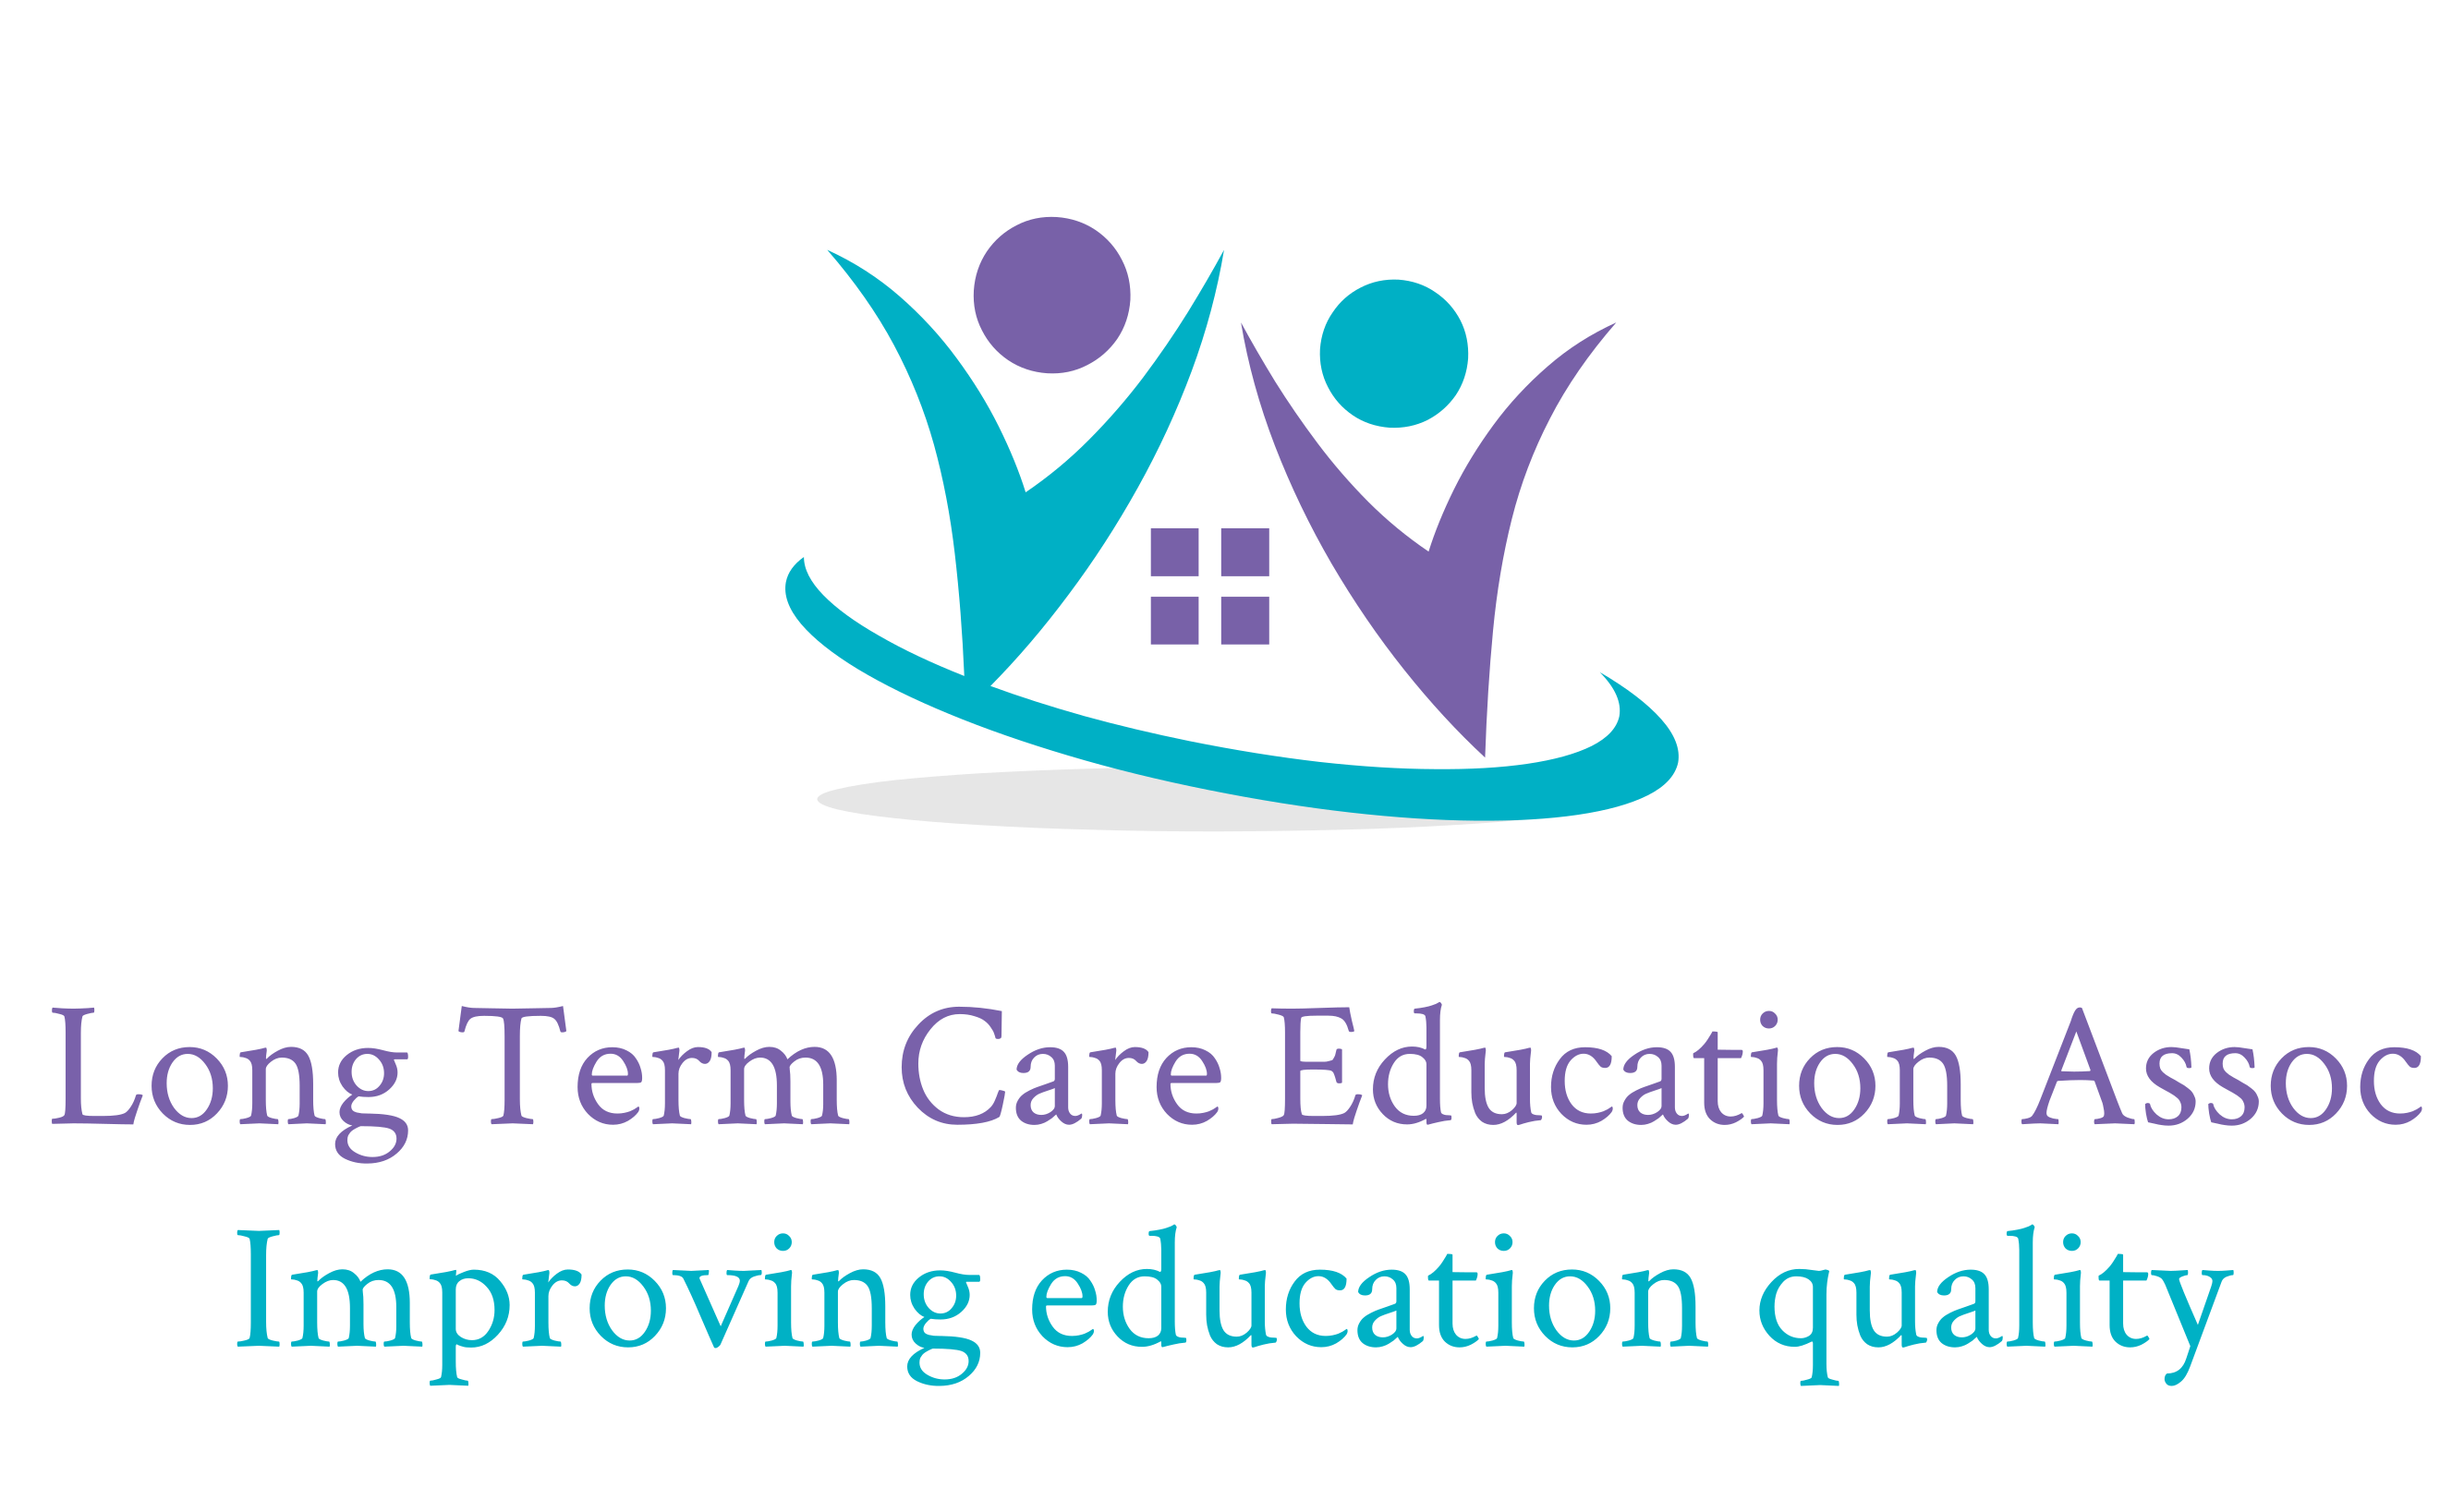 Long Term Care Education Associates